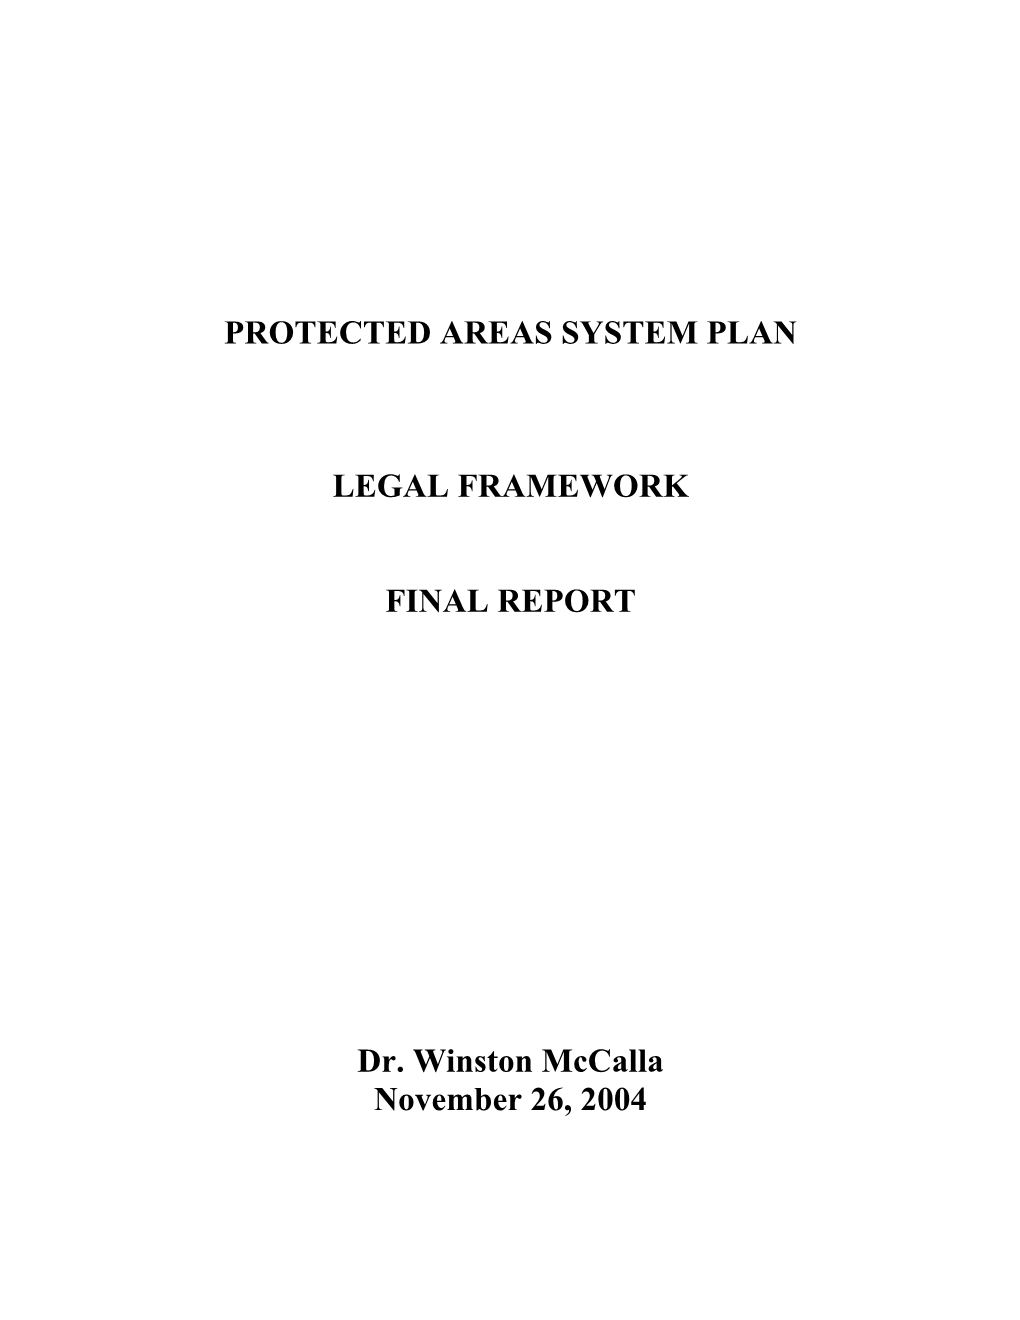 Legal Framework Report 2004